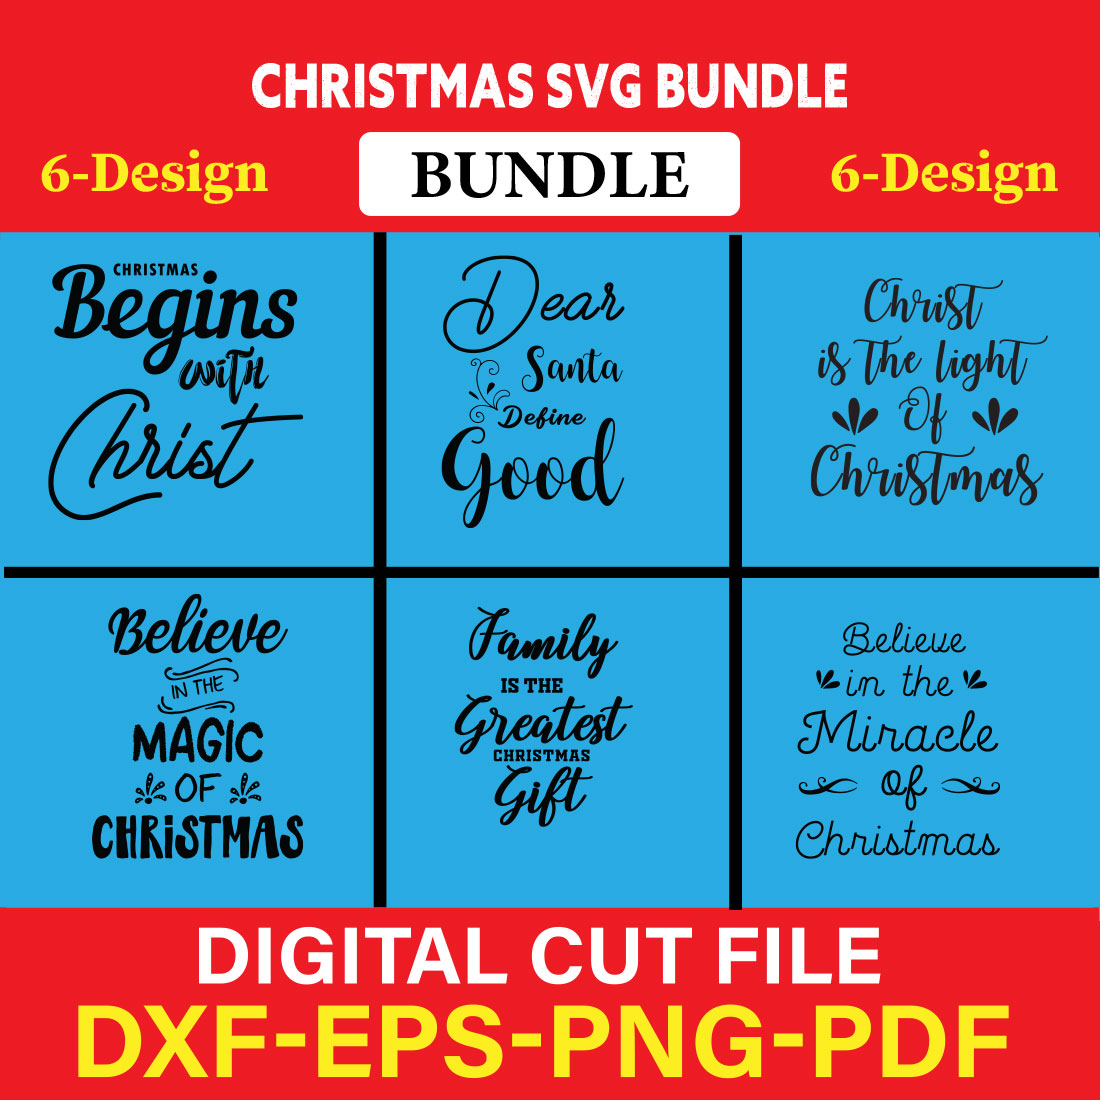 Christmas T-shirt Design Bundle Vol-1 cover image.